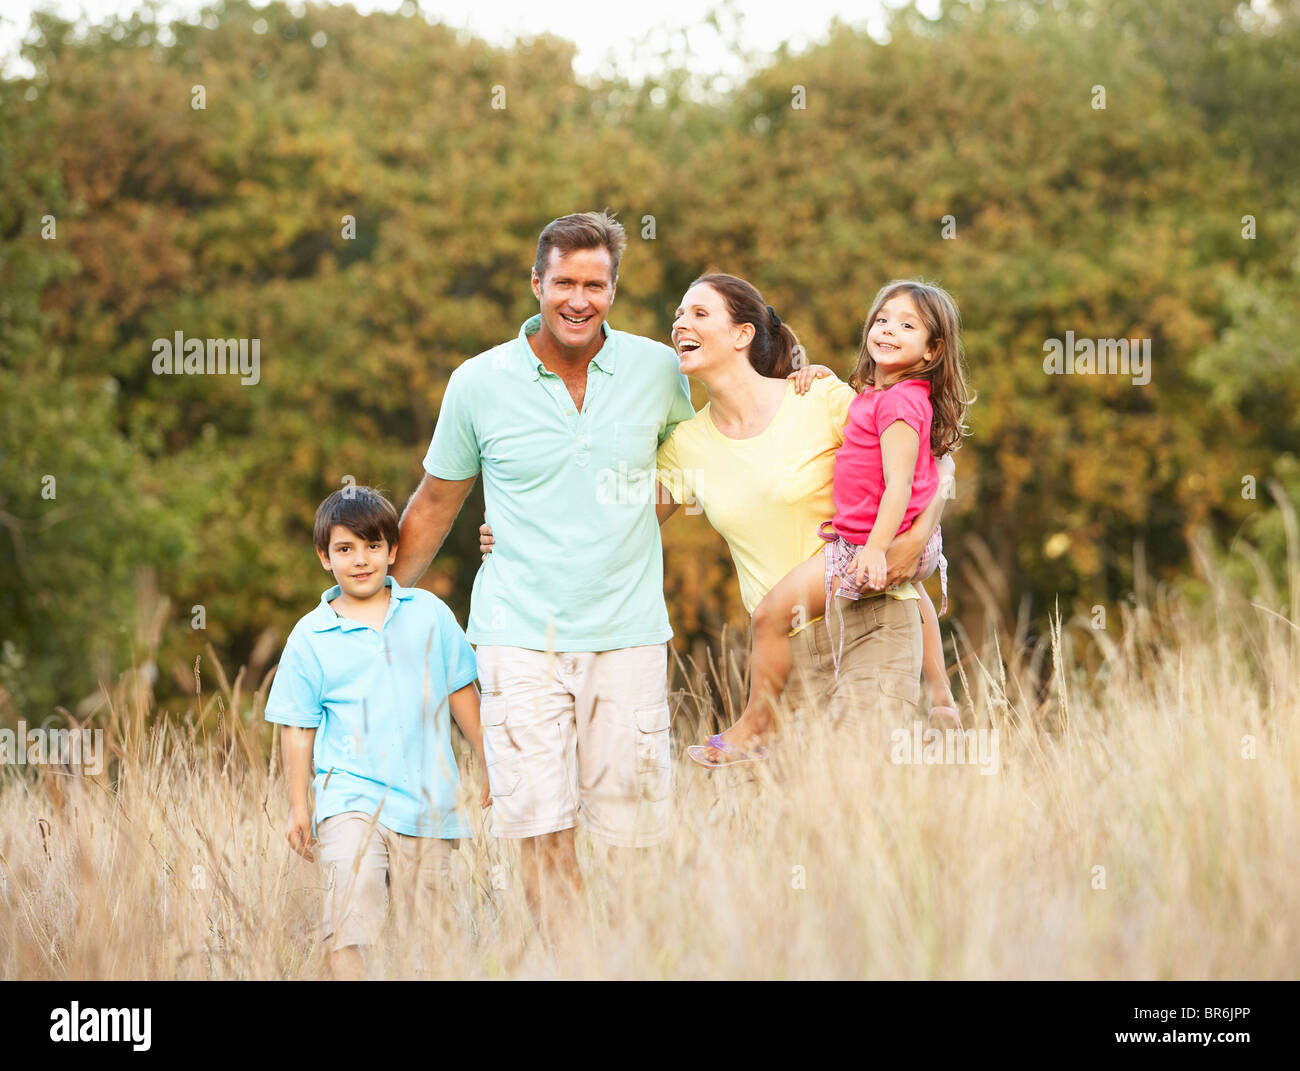 Family Enjoying Walk In Park Stock Photo